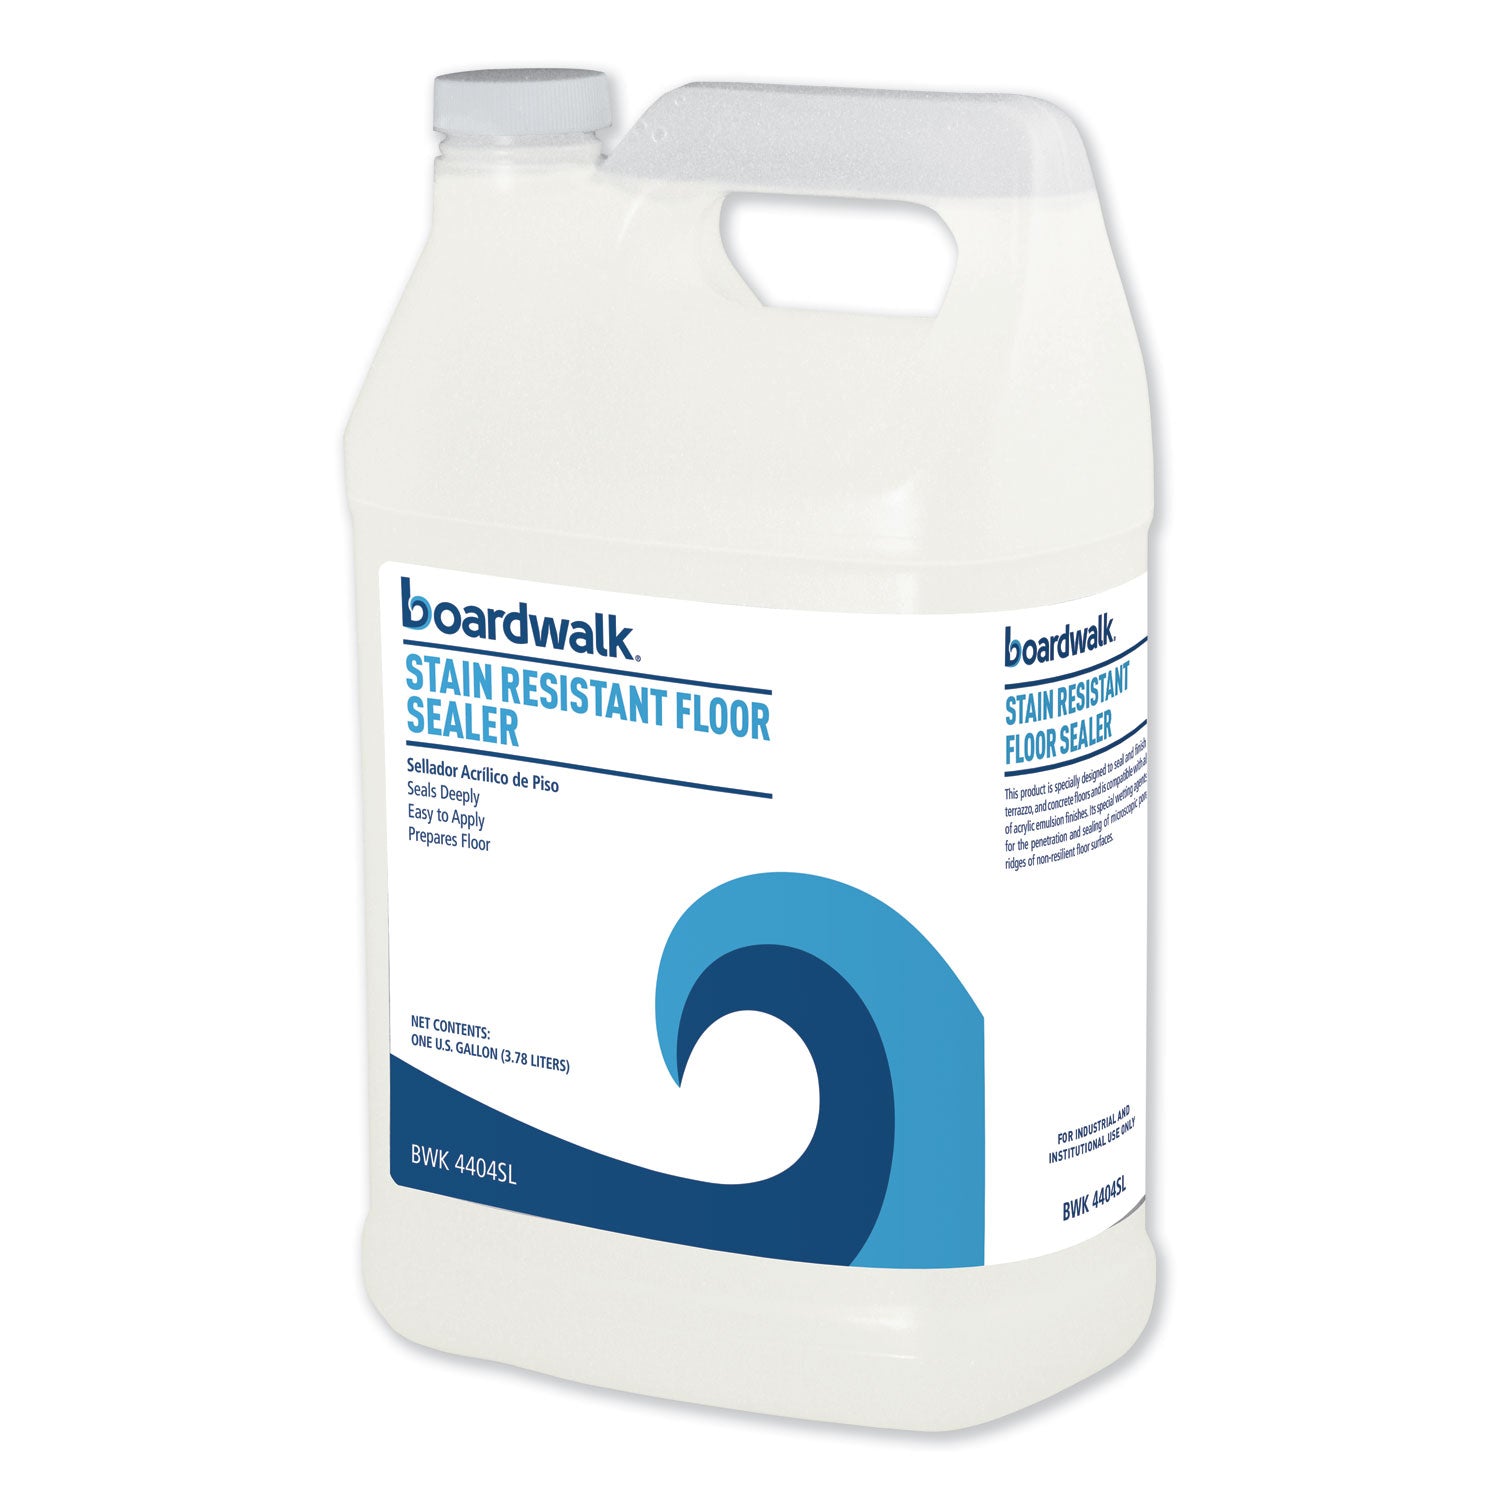 stain-resistant-floor-sealer-1-gal-bottle-4-carton_bwk4404sl - 1